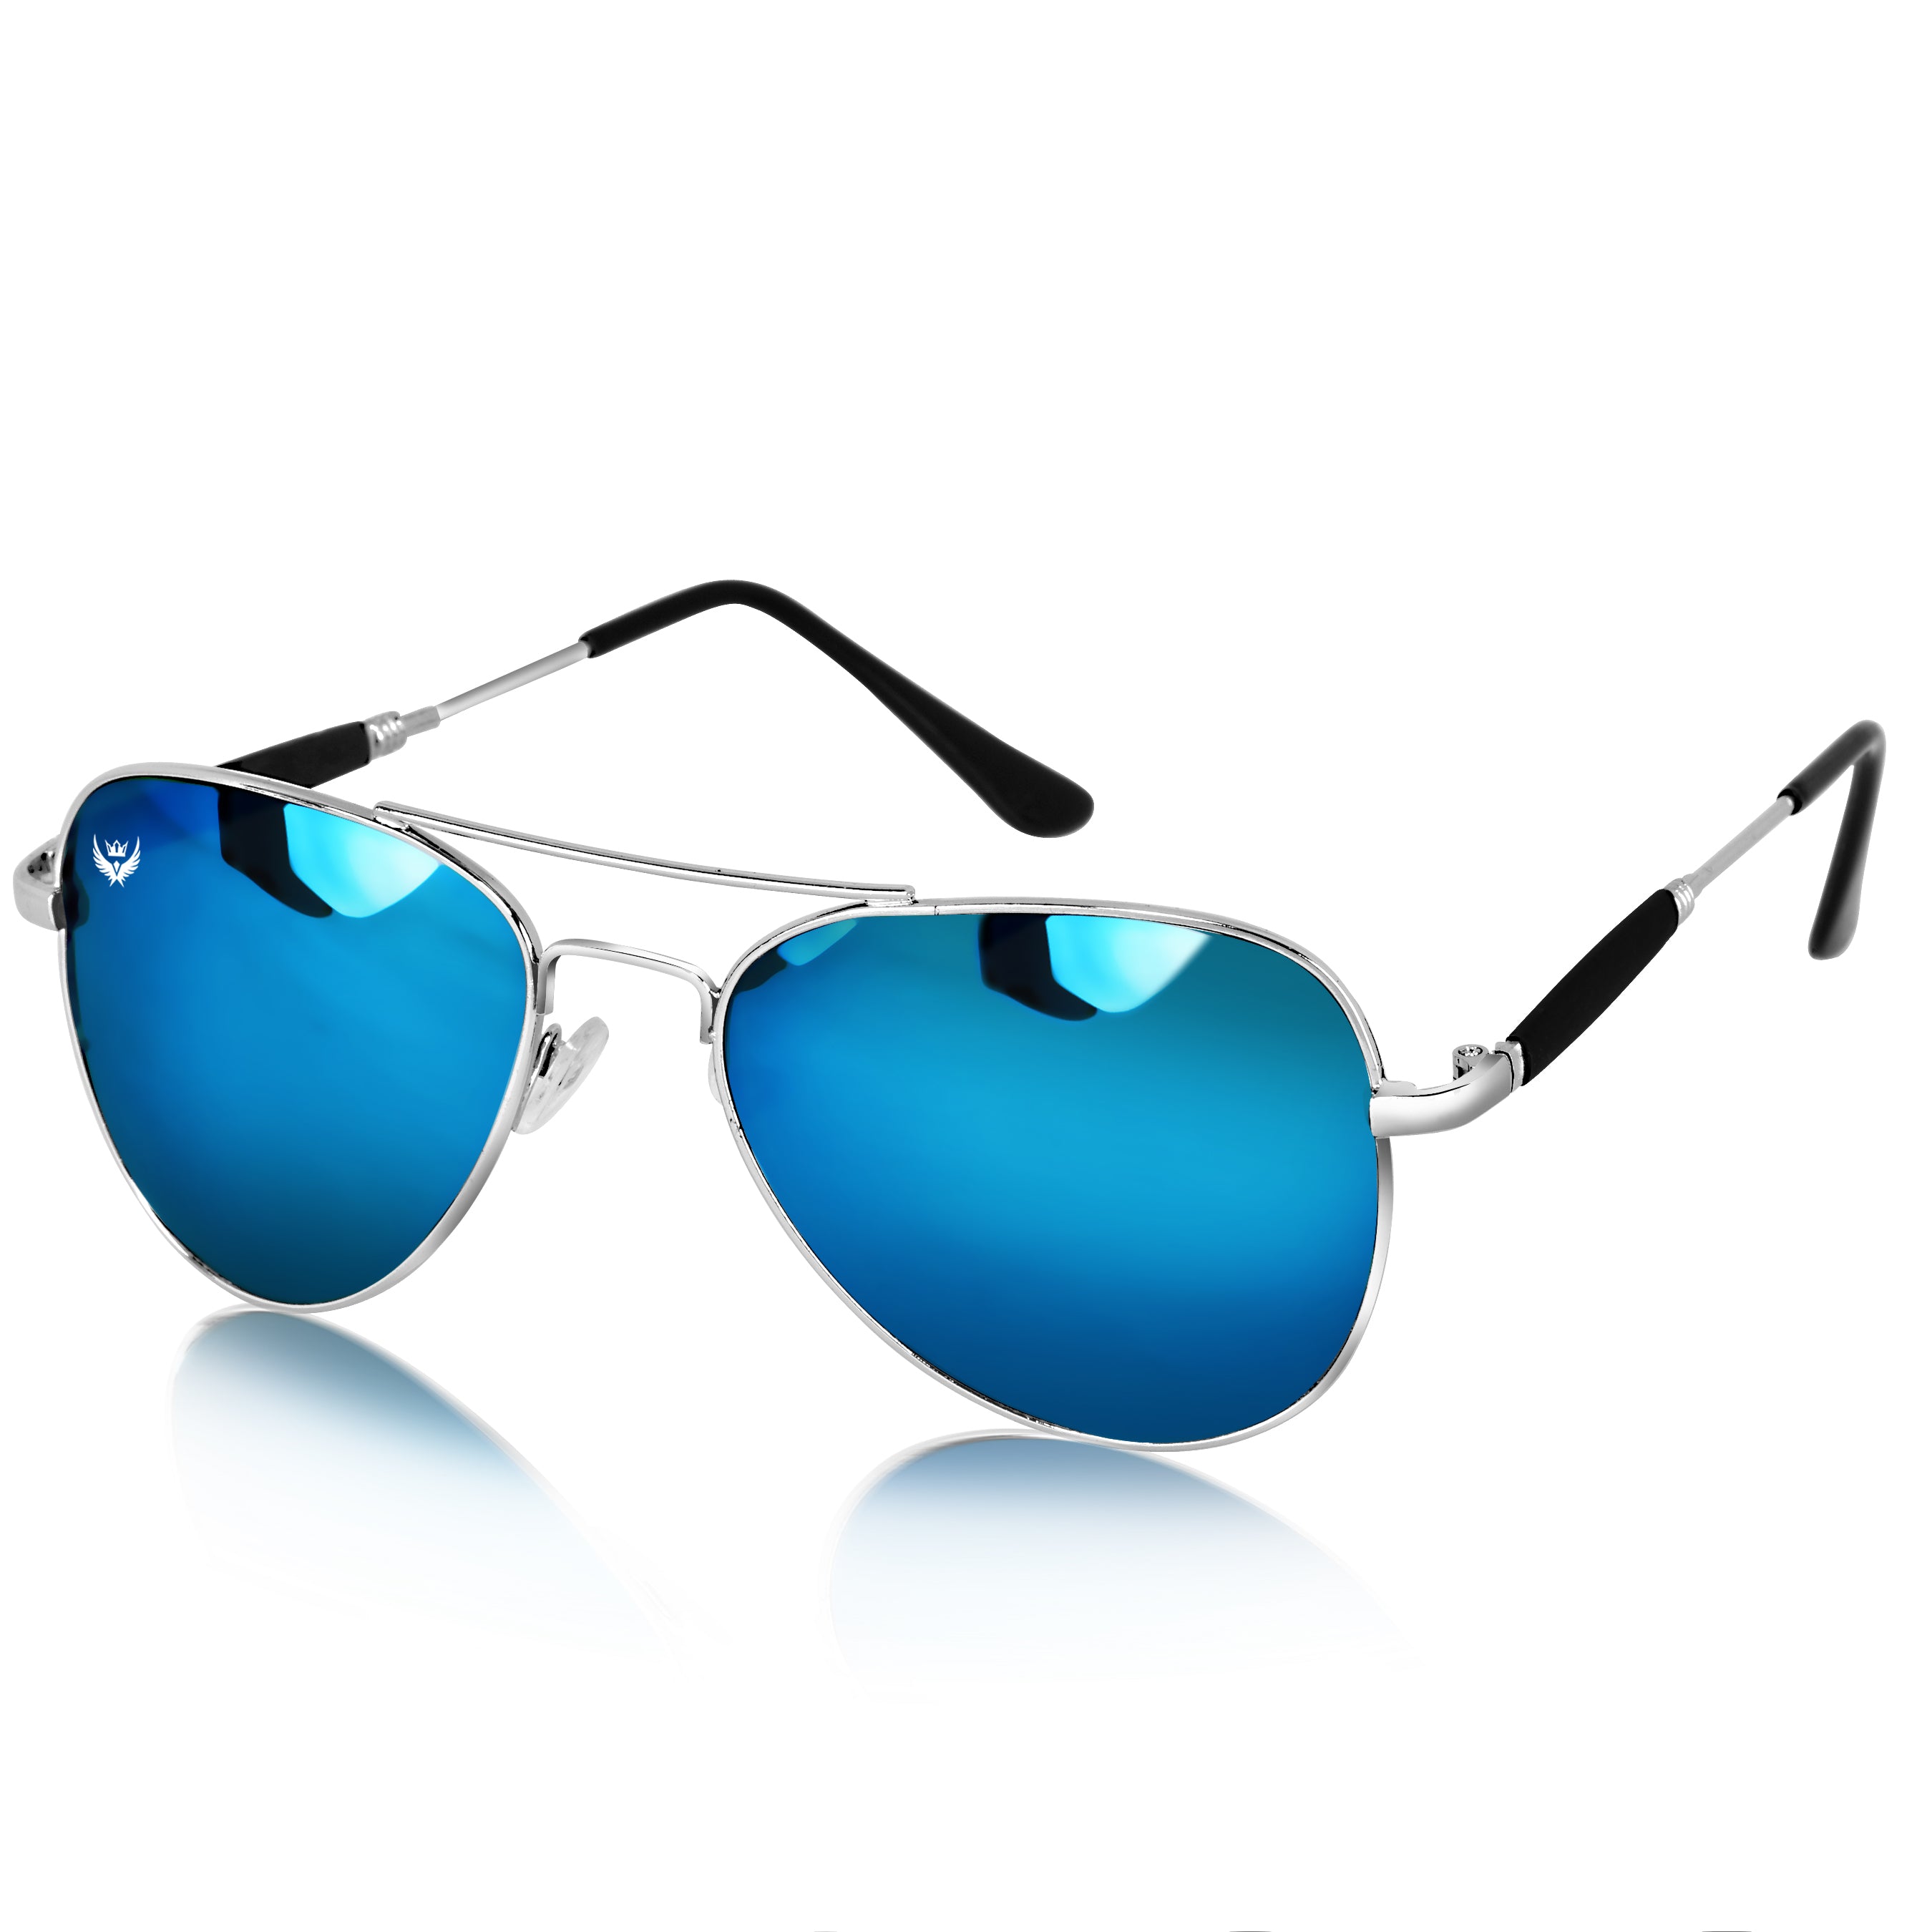 Lorenz Blue Reflector Sunglasses with a classic wayfarer style frame.